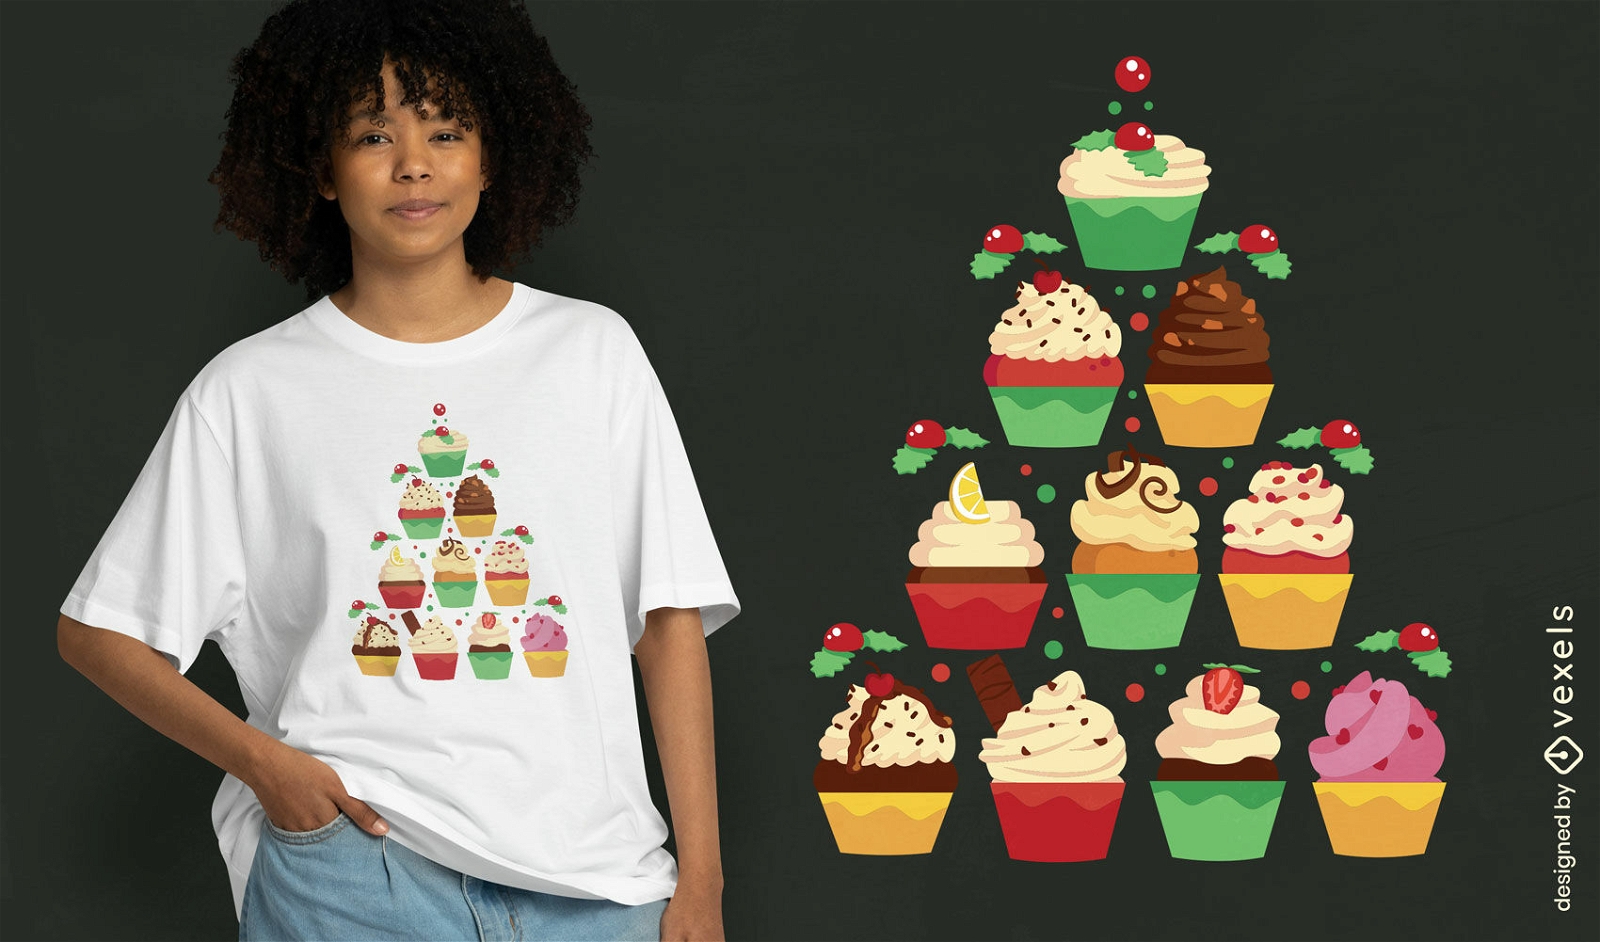 Cupcake tree t-shirt design